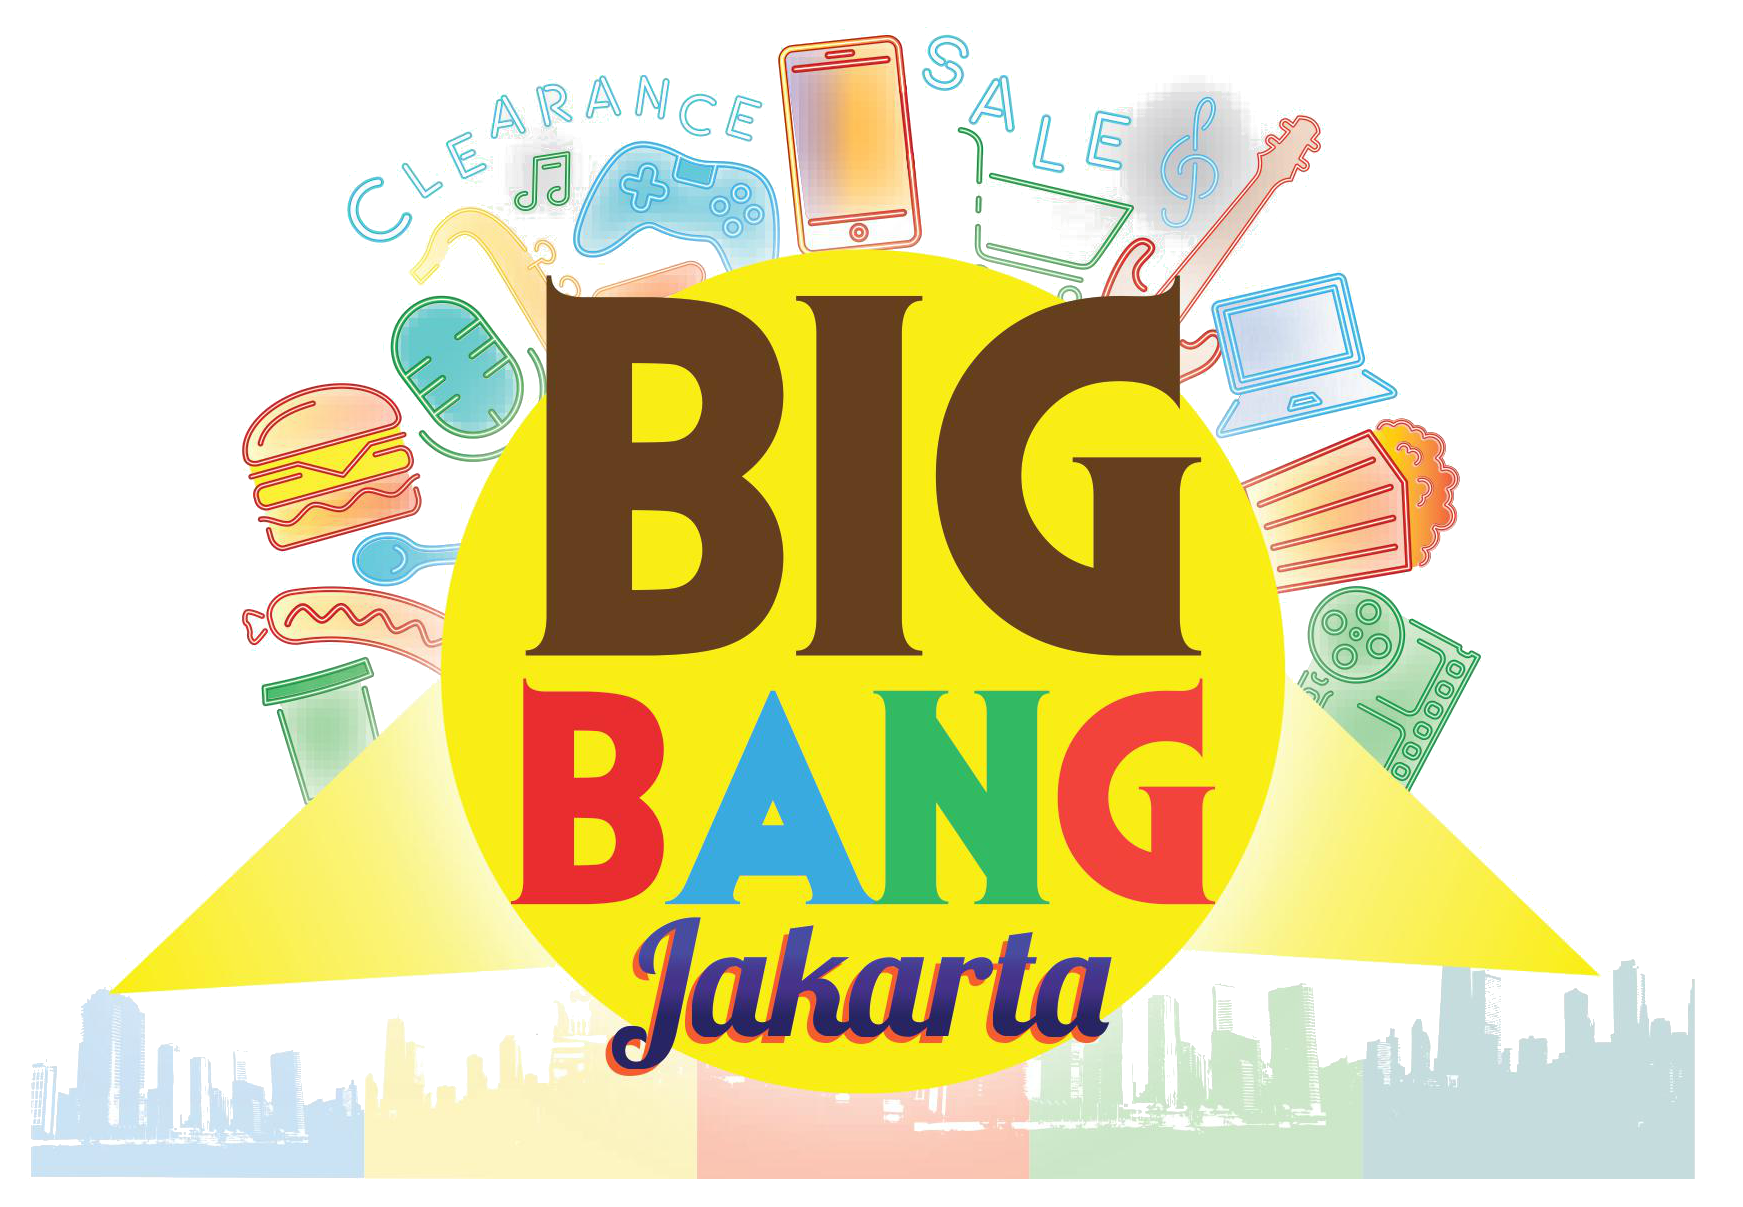 Big Bang Jakarta 2019